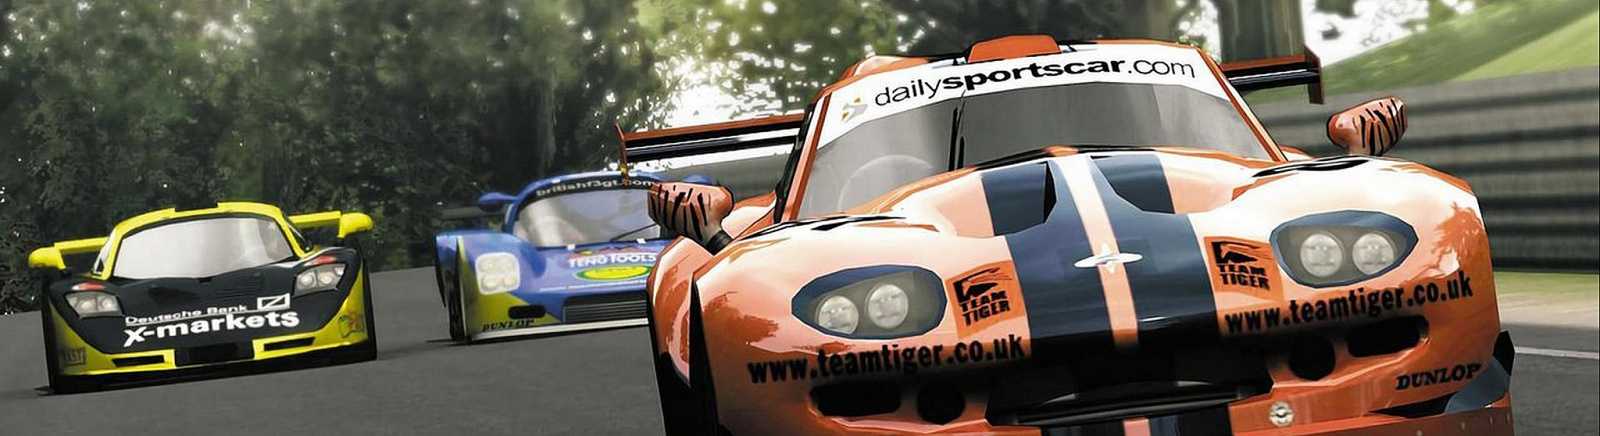 Дата выхода TOCA Race Driver 3 (DTM Race Driver 3)  на PC, PS2 и Xbox в России и во всем мире